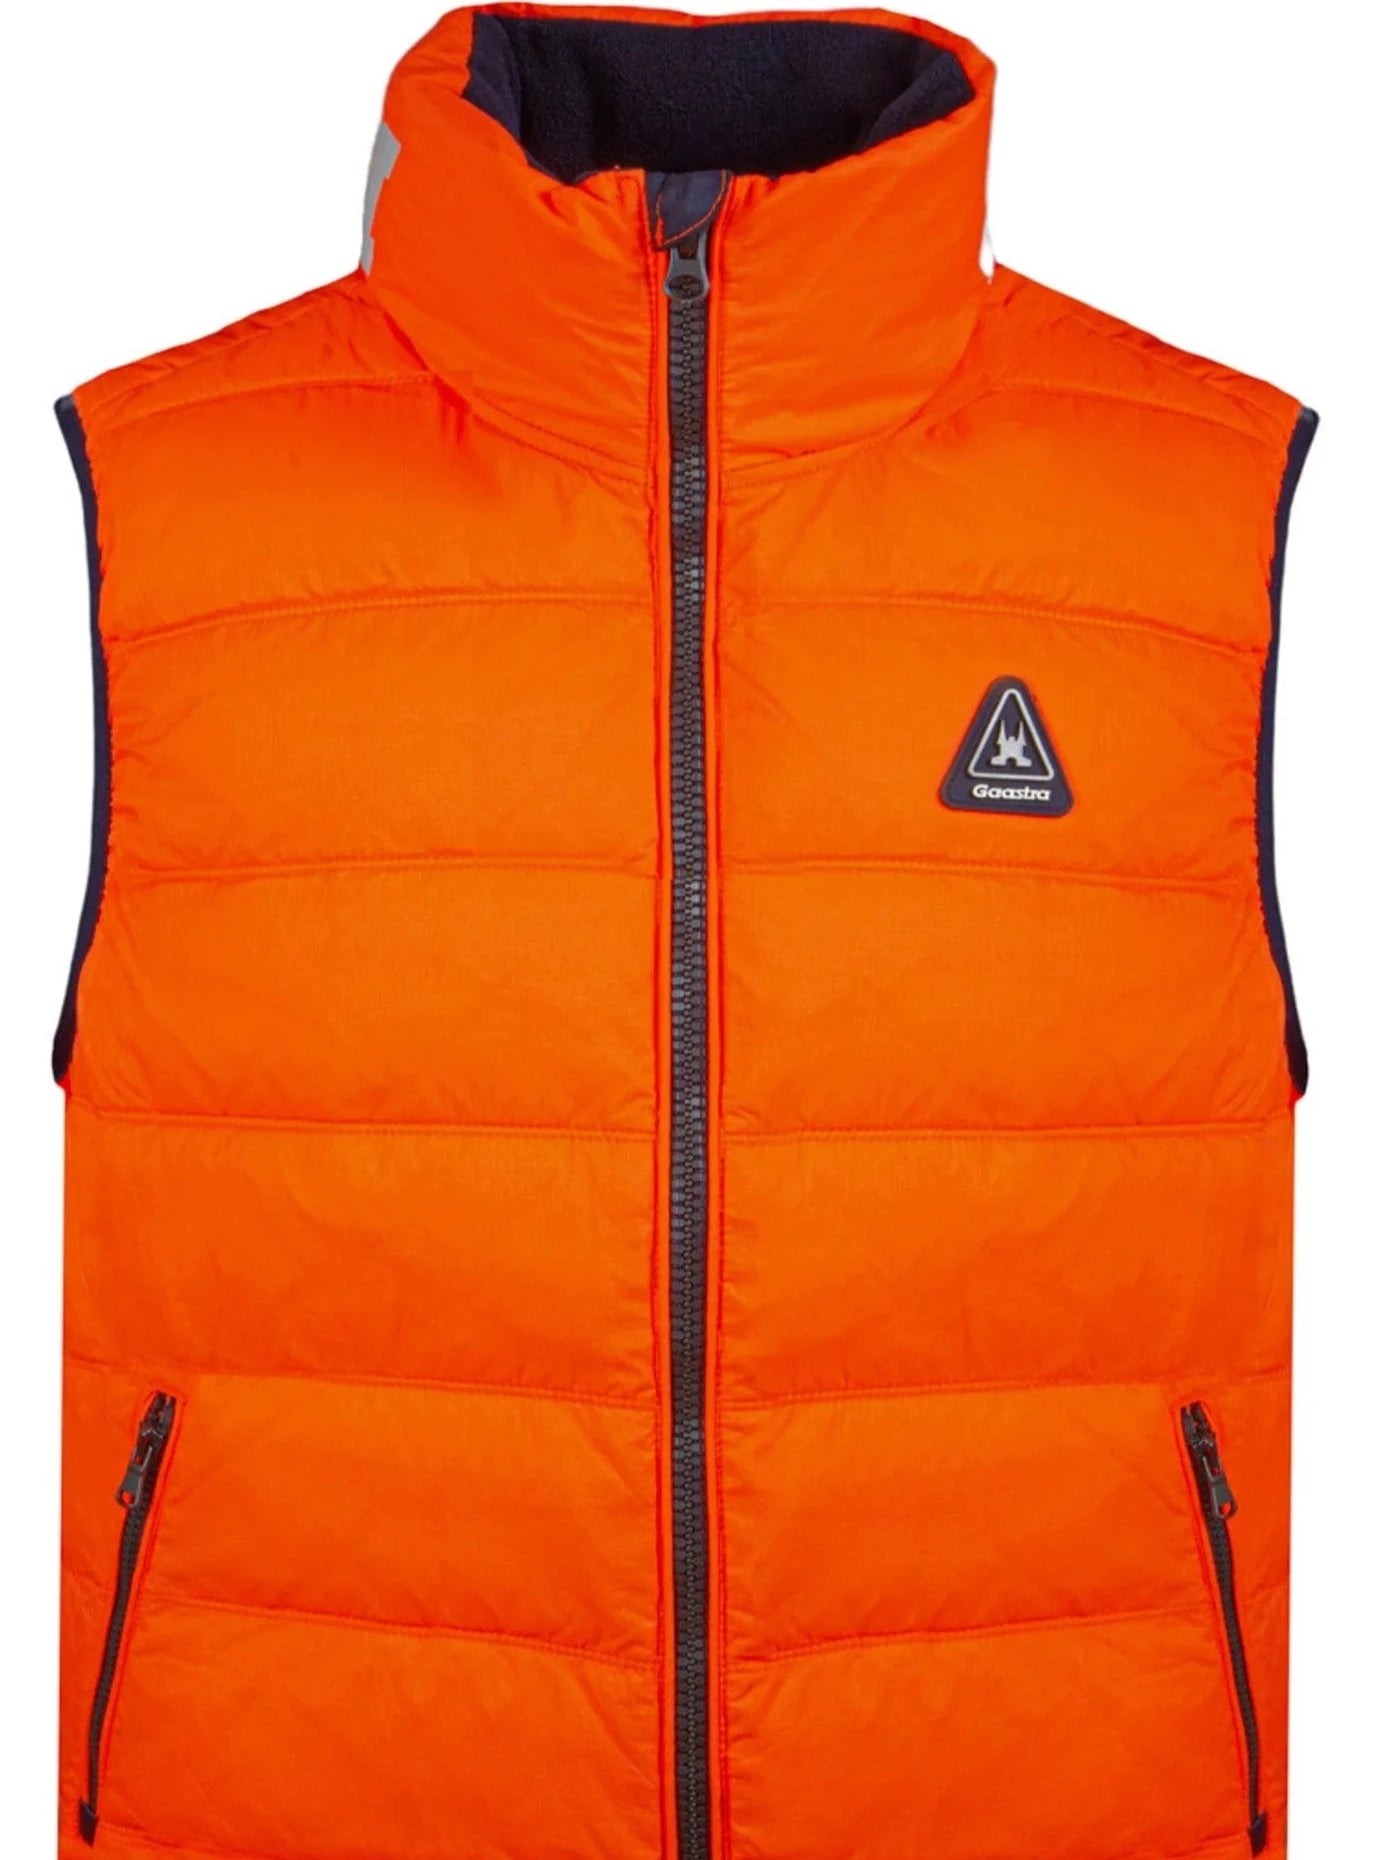 Bodywarmer Gaastra All Seasons - 100% nylon - orange - Stateshop Fashion